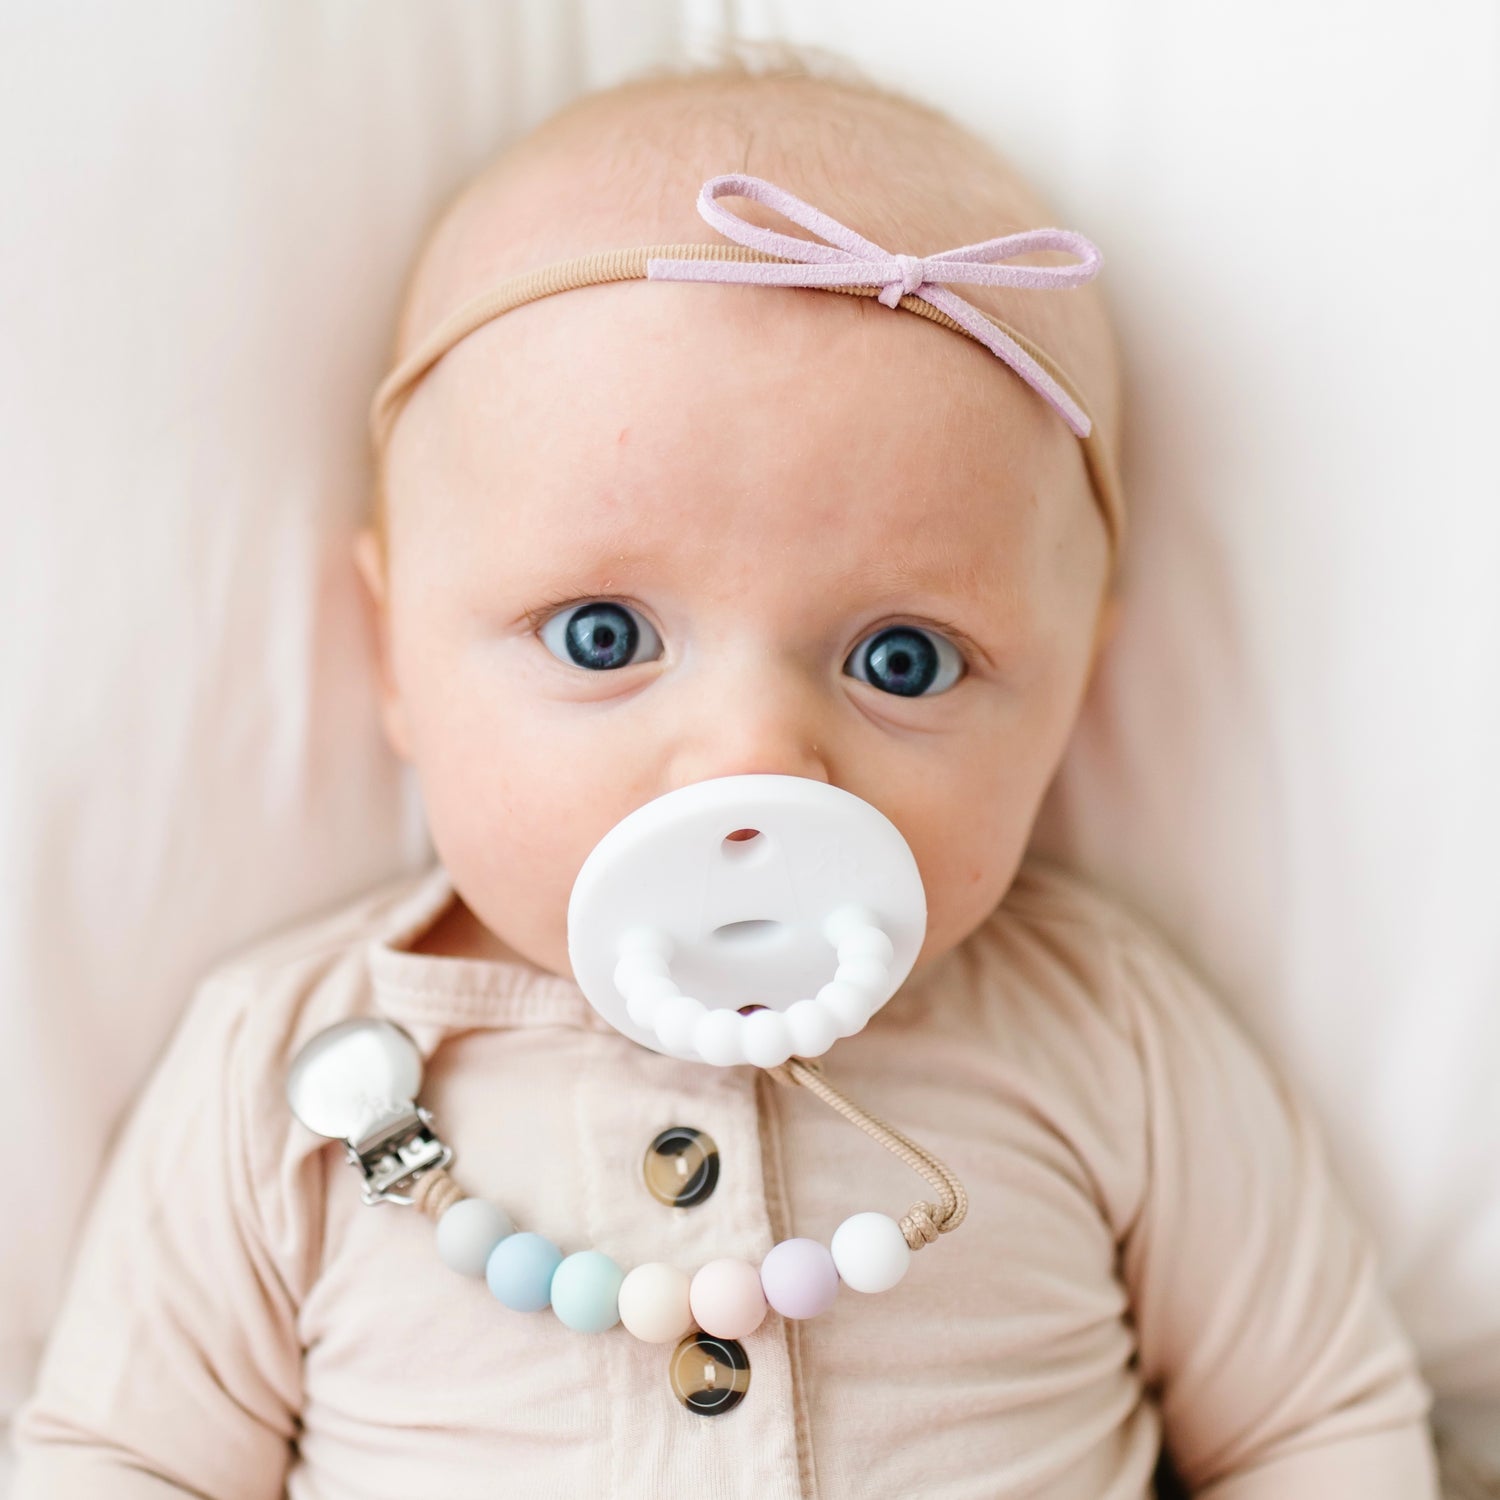 Baby girl using a White Cutie PAT and Georgia Cutie Clip.